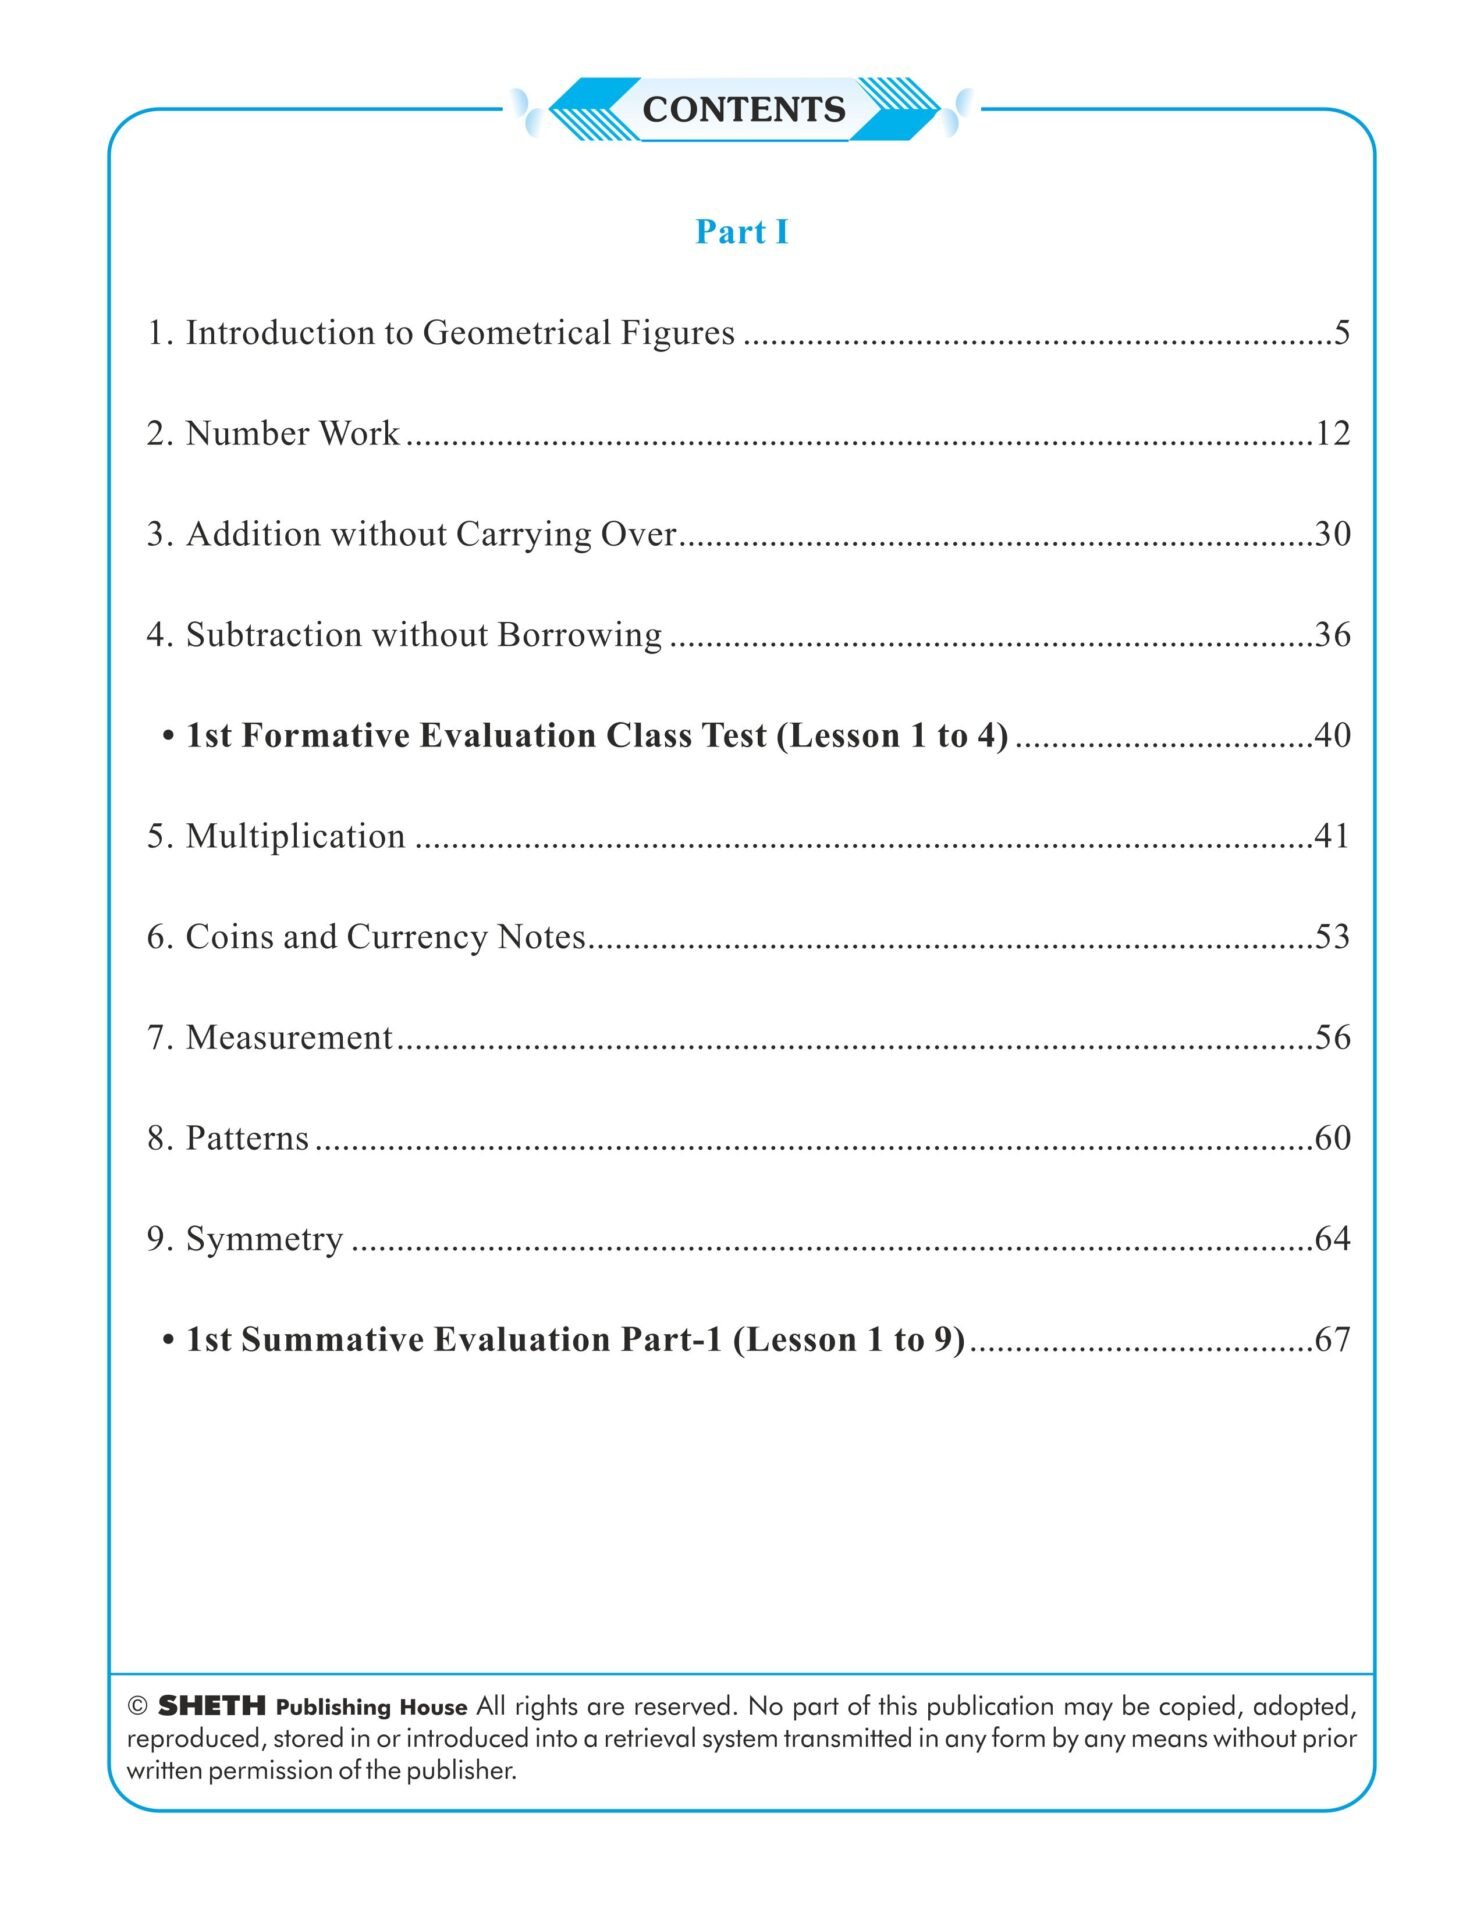 CCE Pattern Nigam Scholar Workbooks Mathematics Standard 3 Term 1 Part 1 2